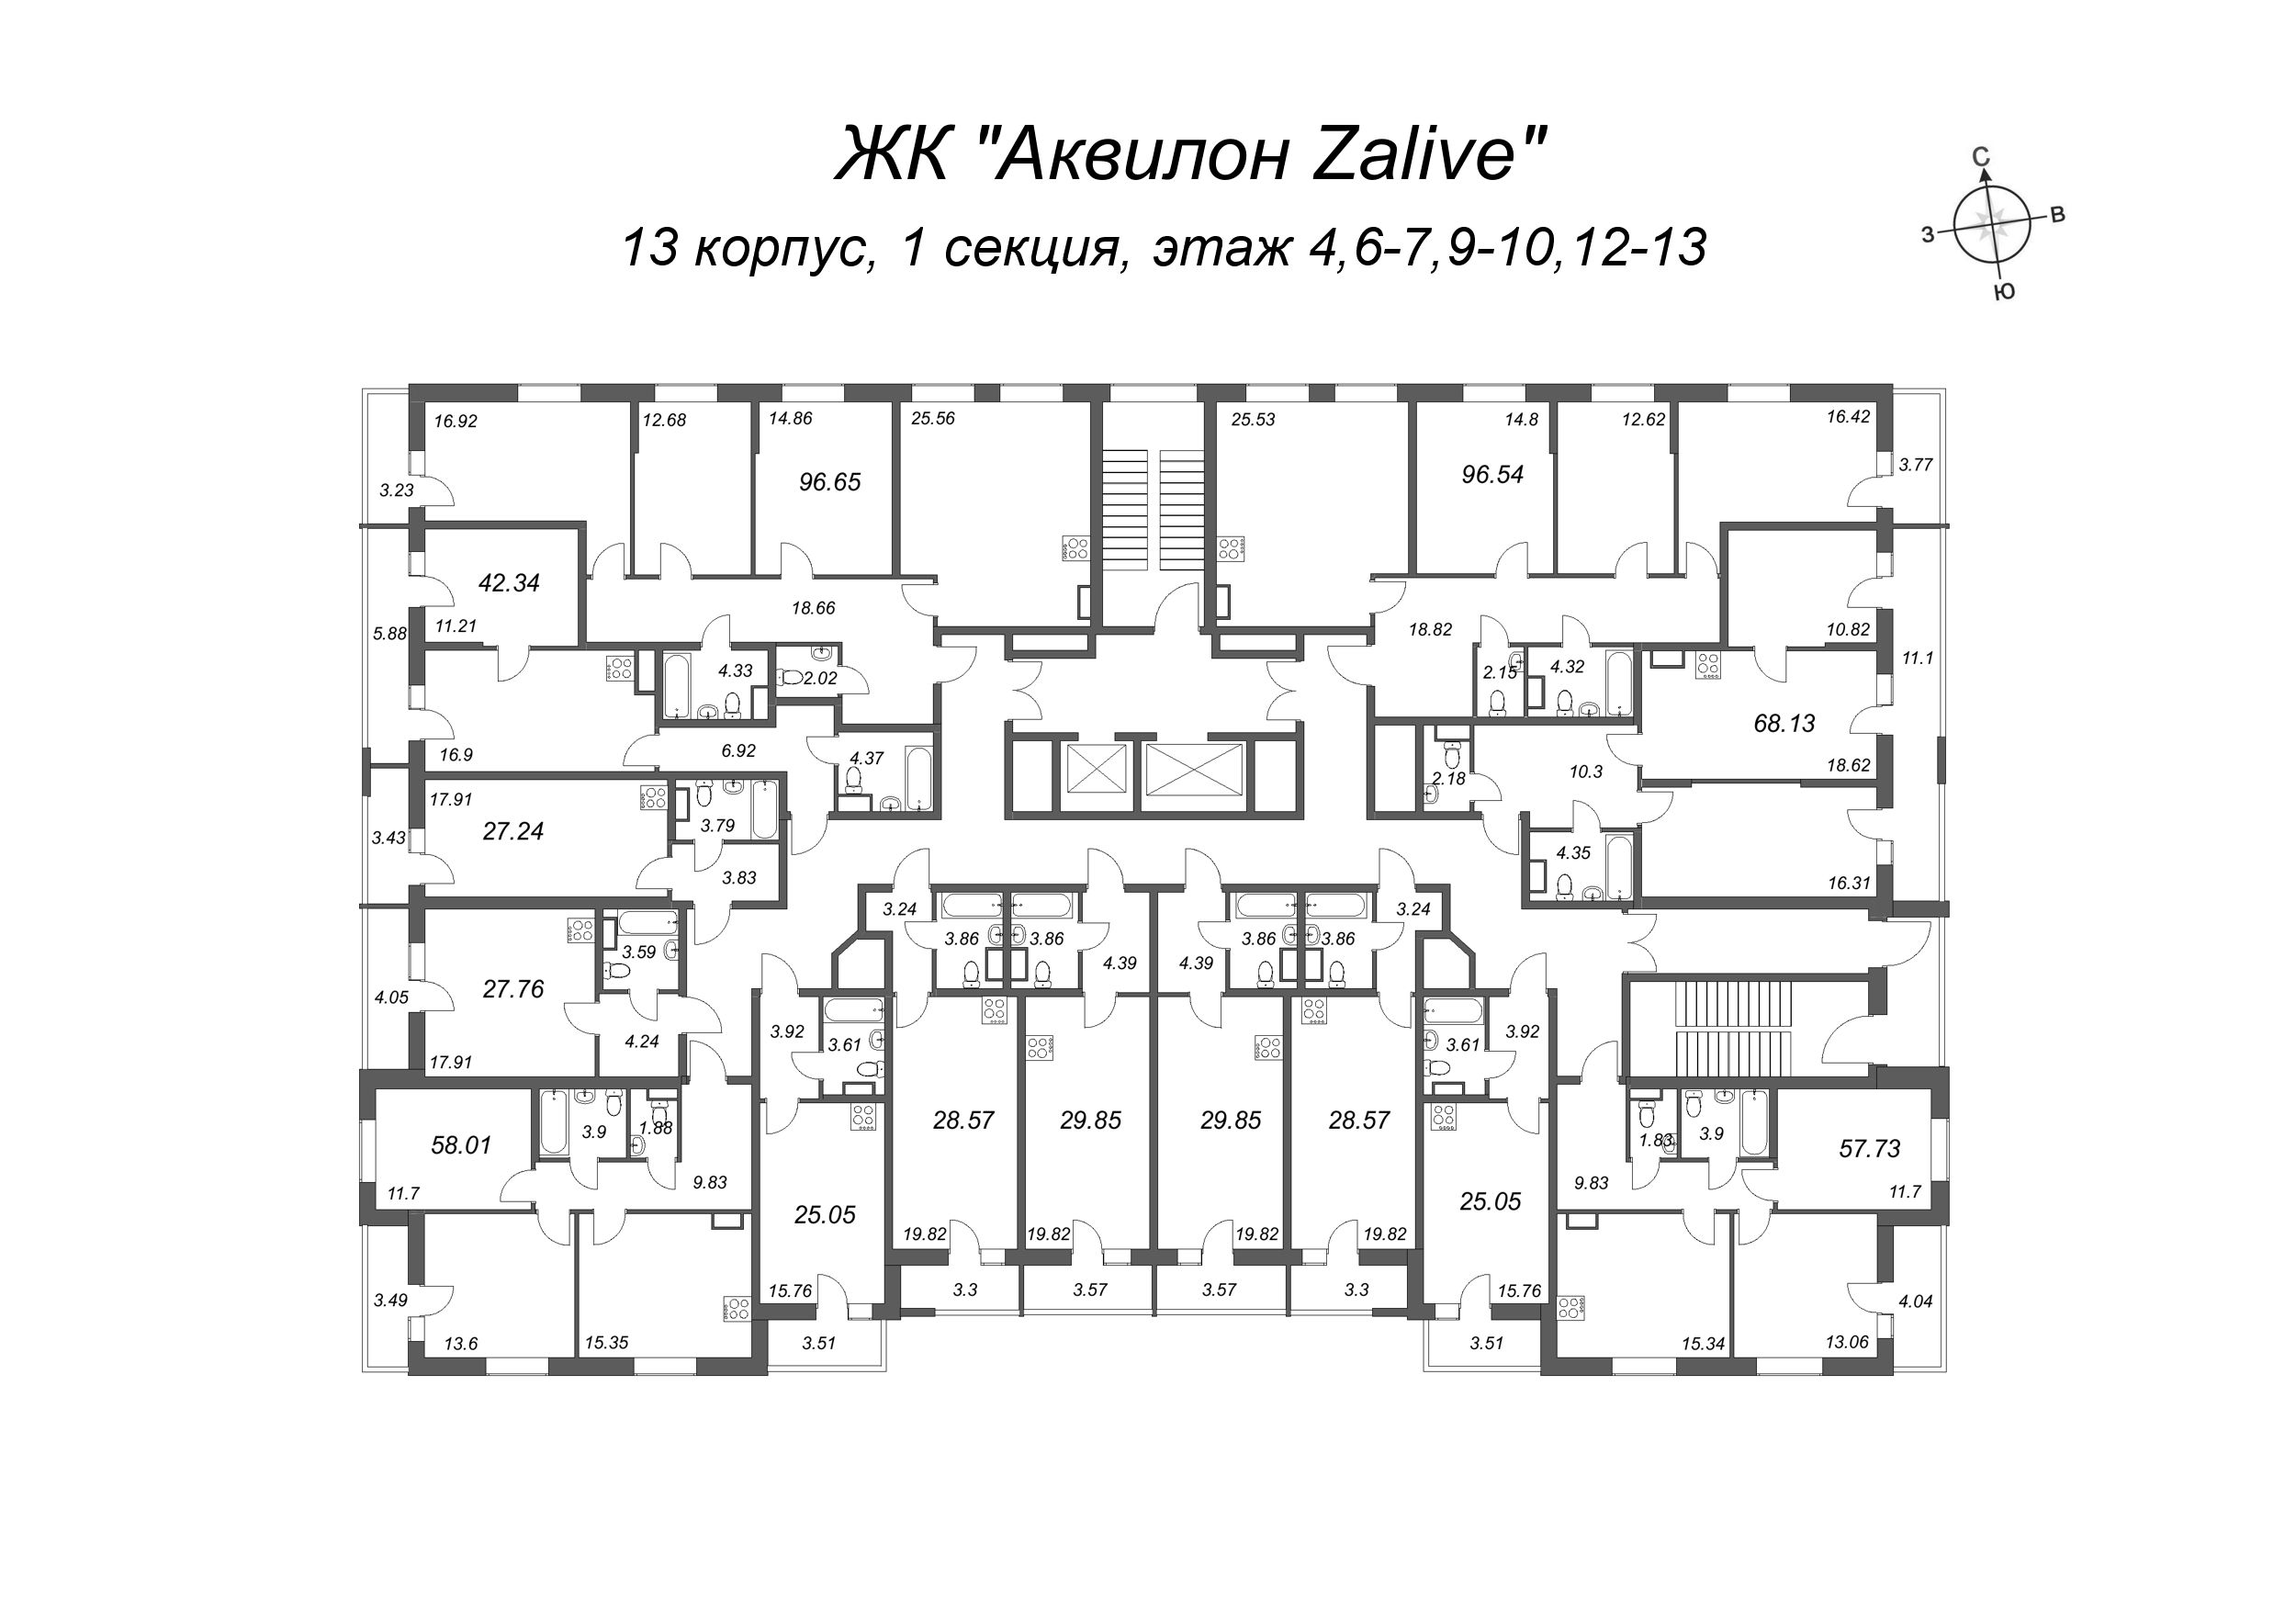 2-комнатная (Евро) квартира, 42.34 м² - планировка этажа